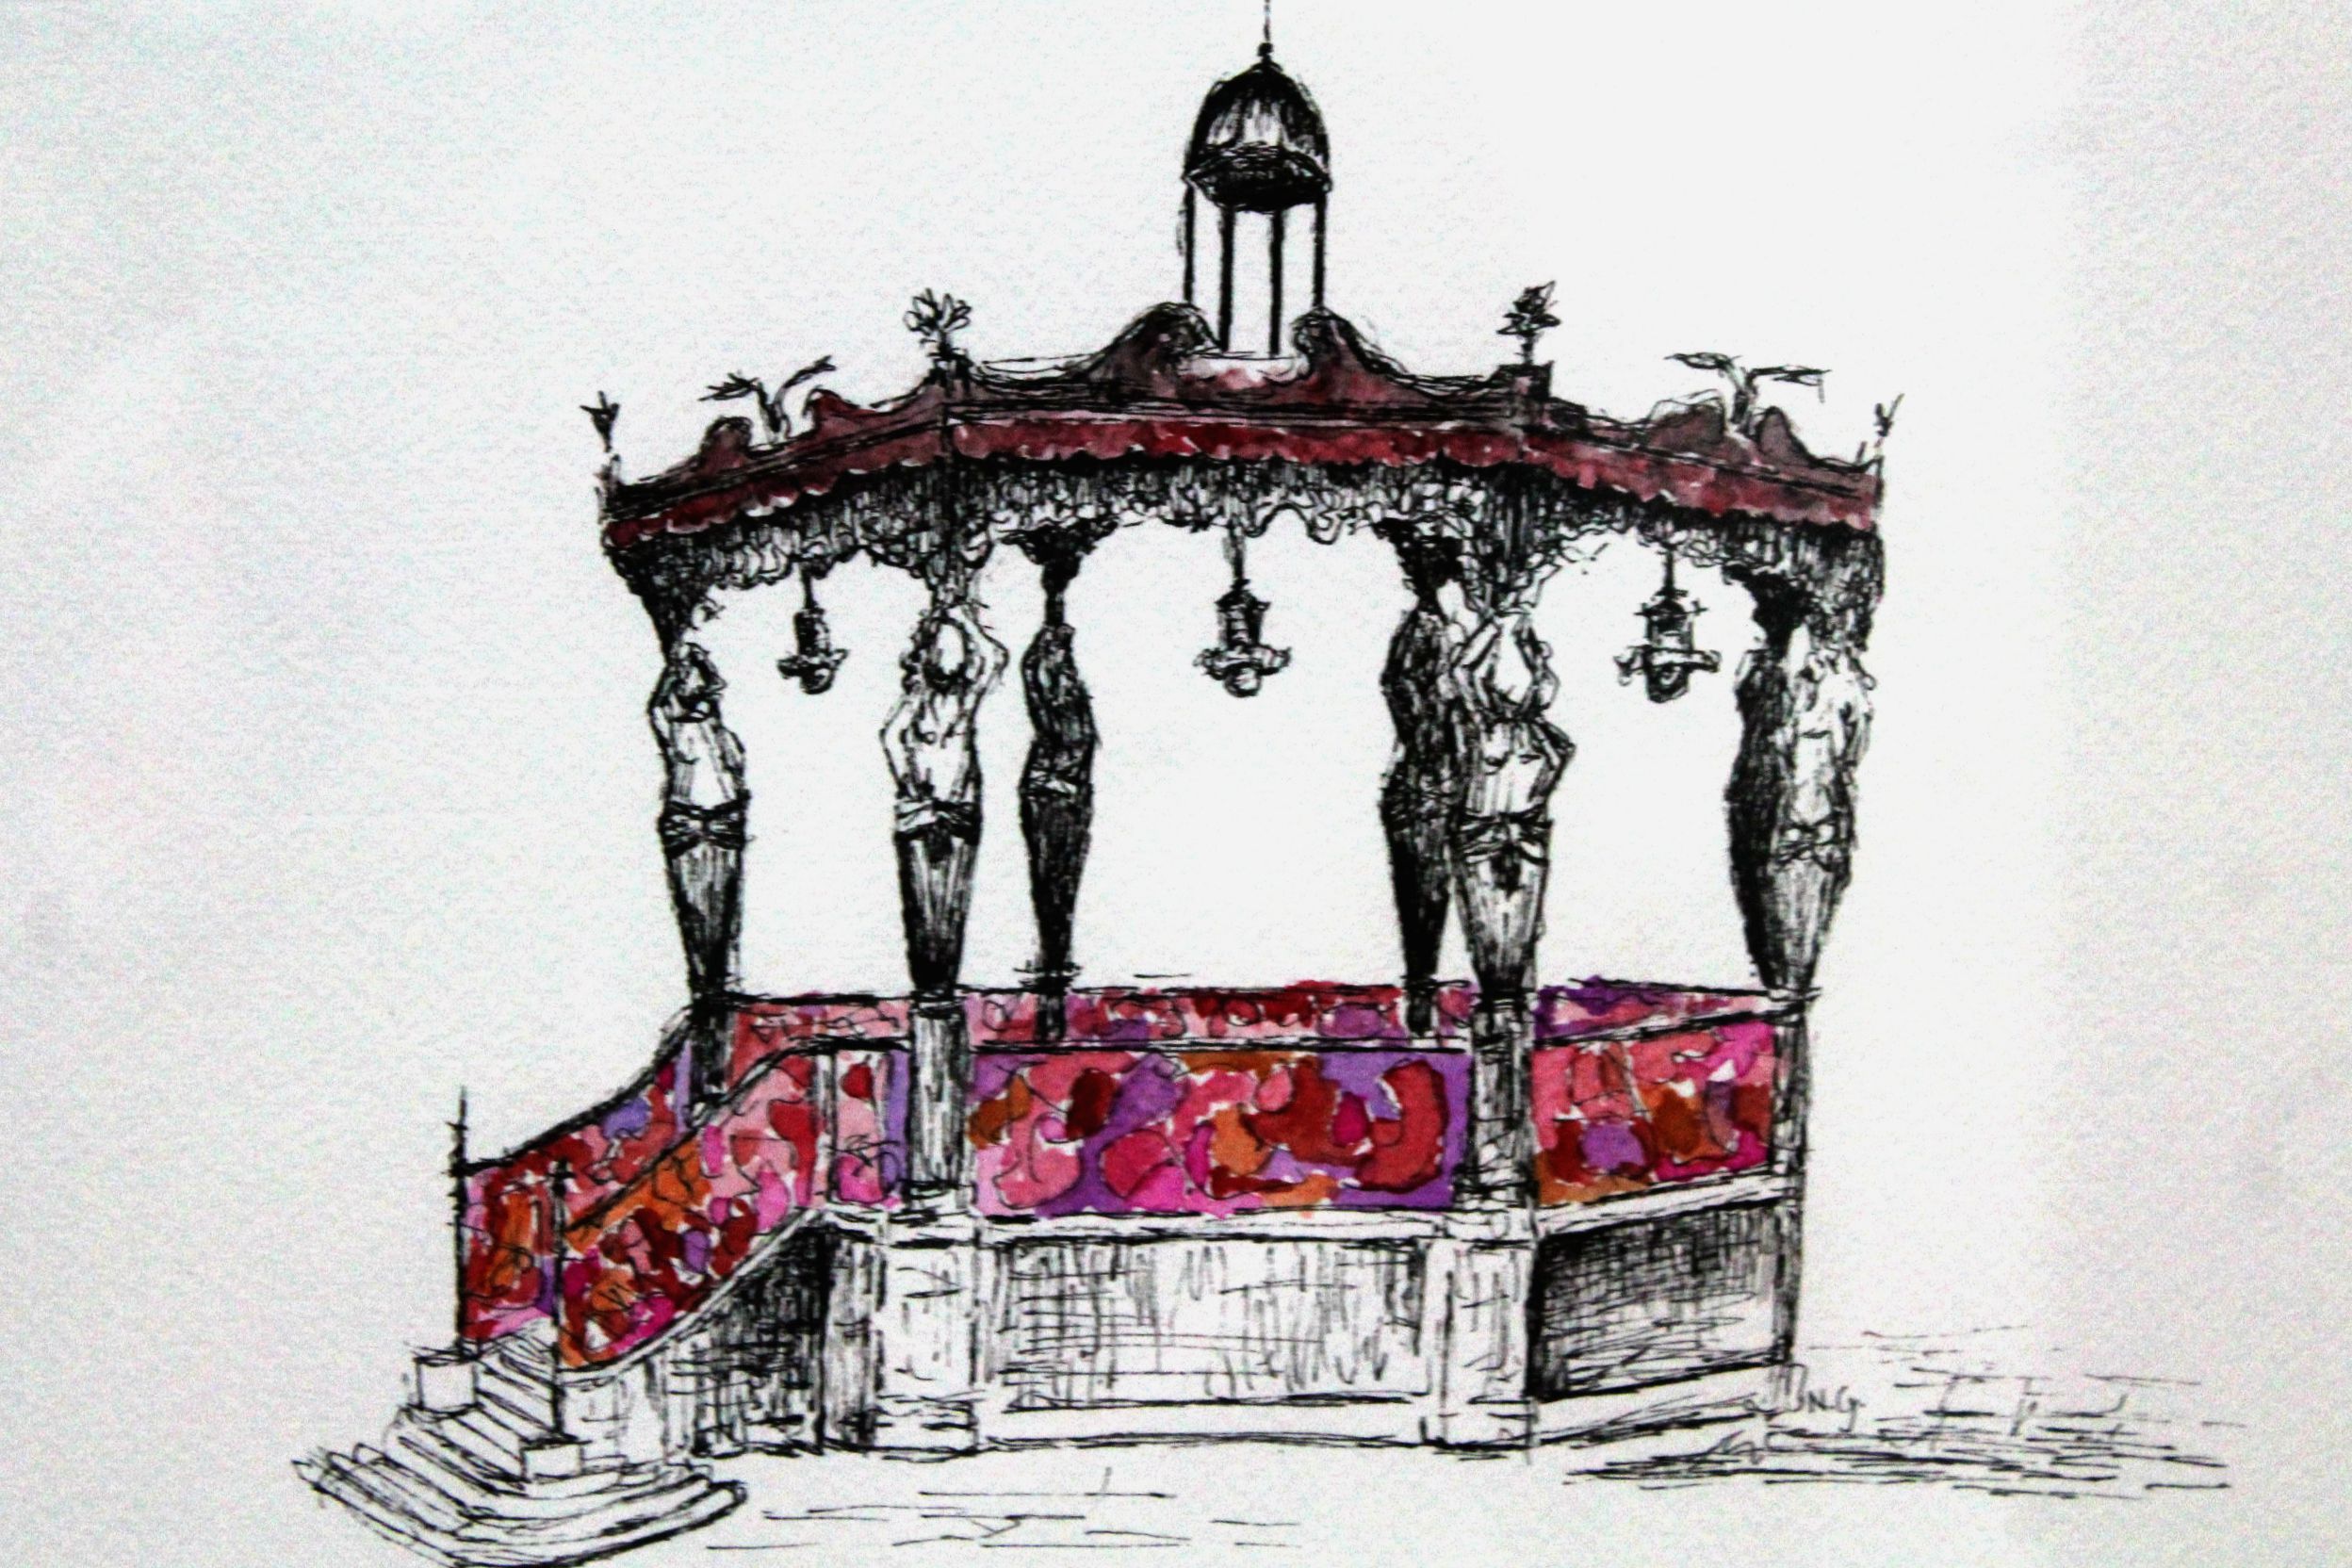 "Kiosco de Plaza de Armas", Natalie Gonzalez de Urban Scketchers Guadalajara